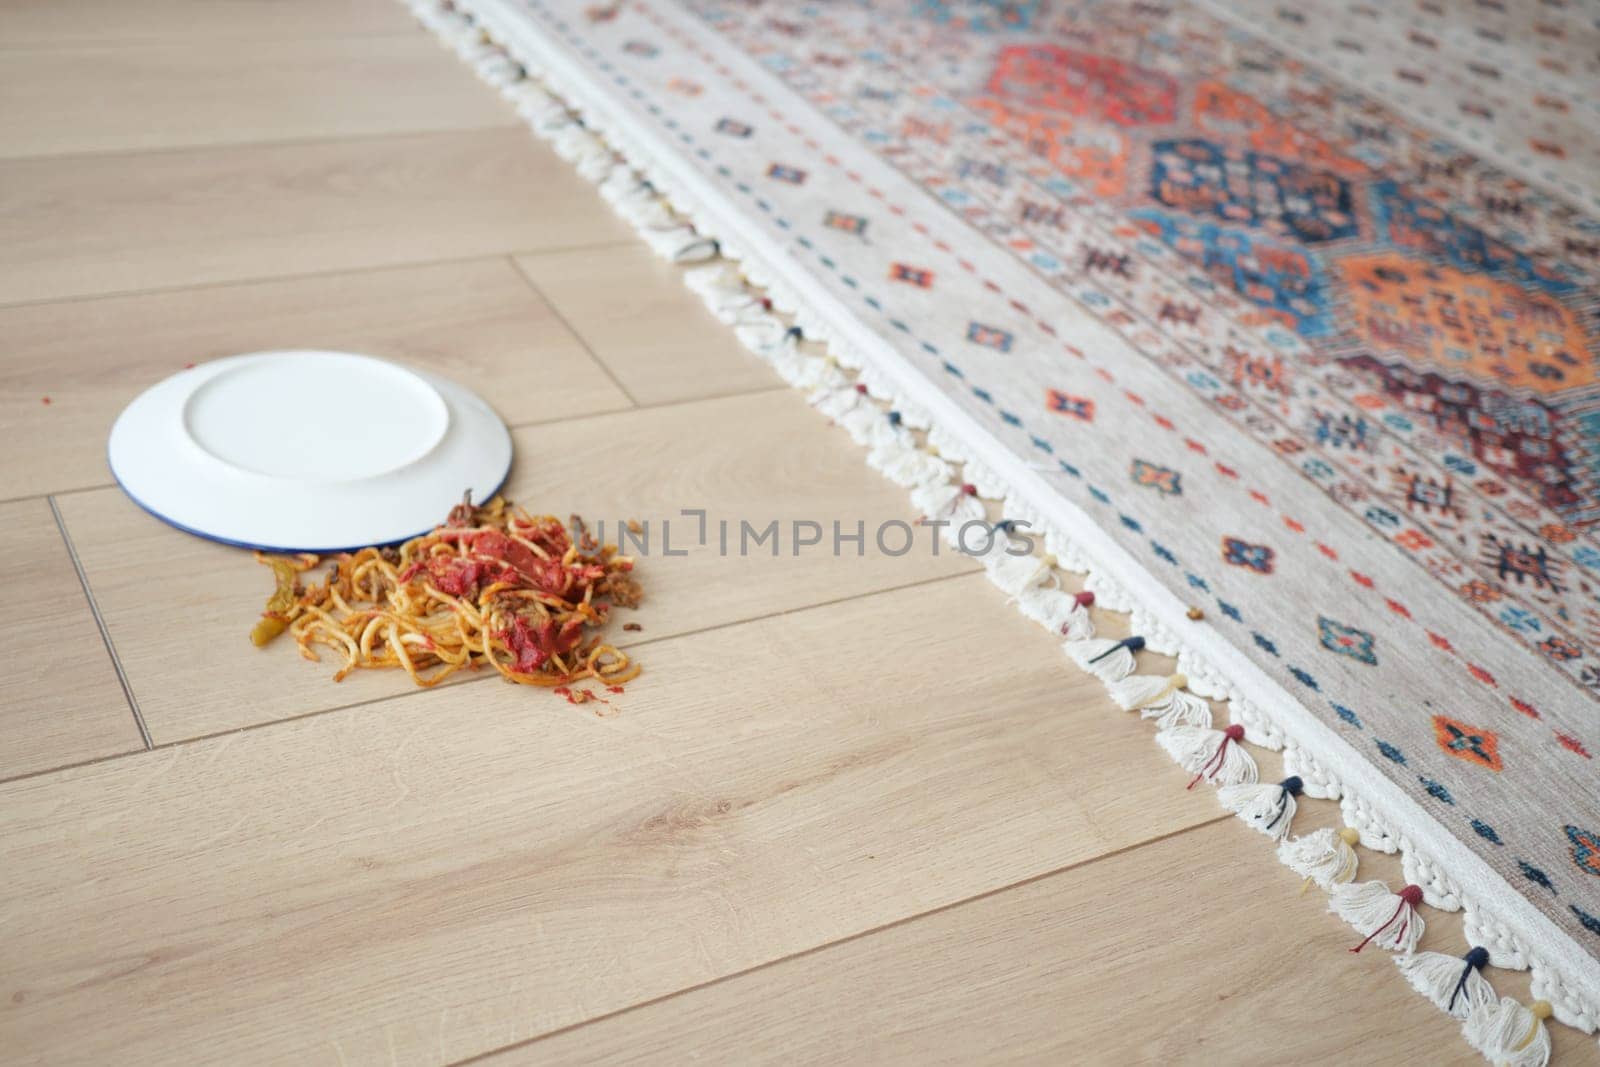 Spaghetti and sauce spilled on floor..